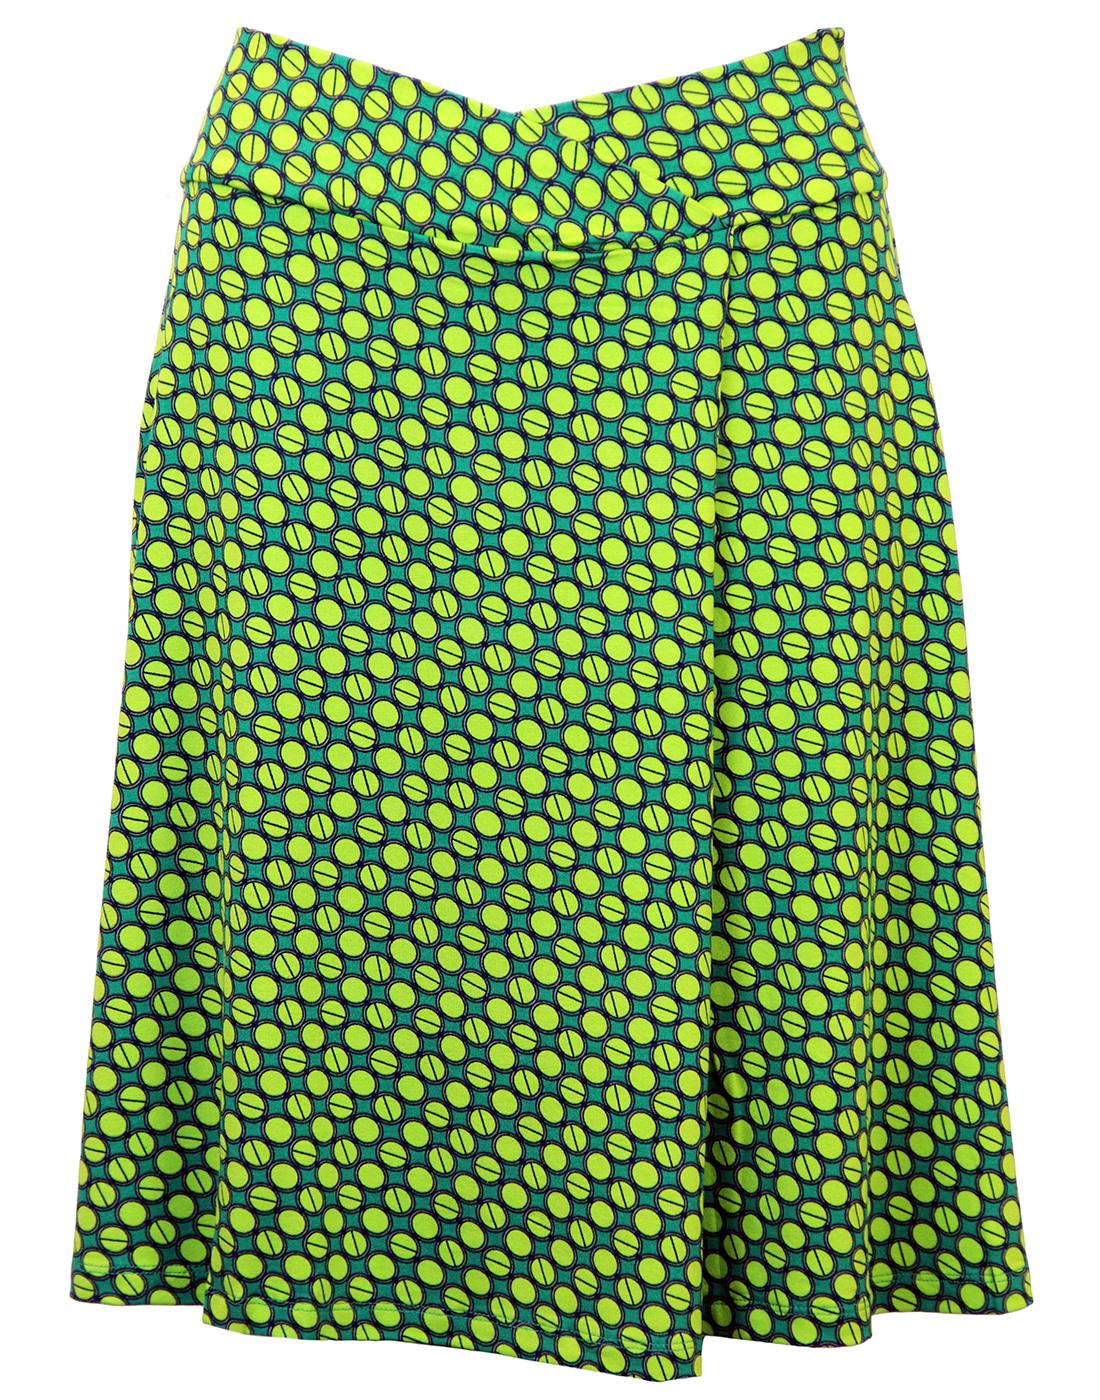 Dash VILA JOY Retro Sixties Mod A-Line Skirt